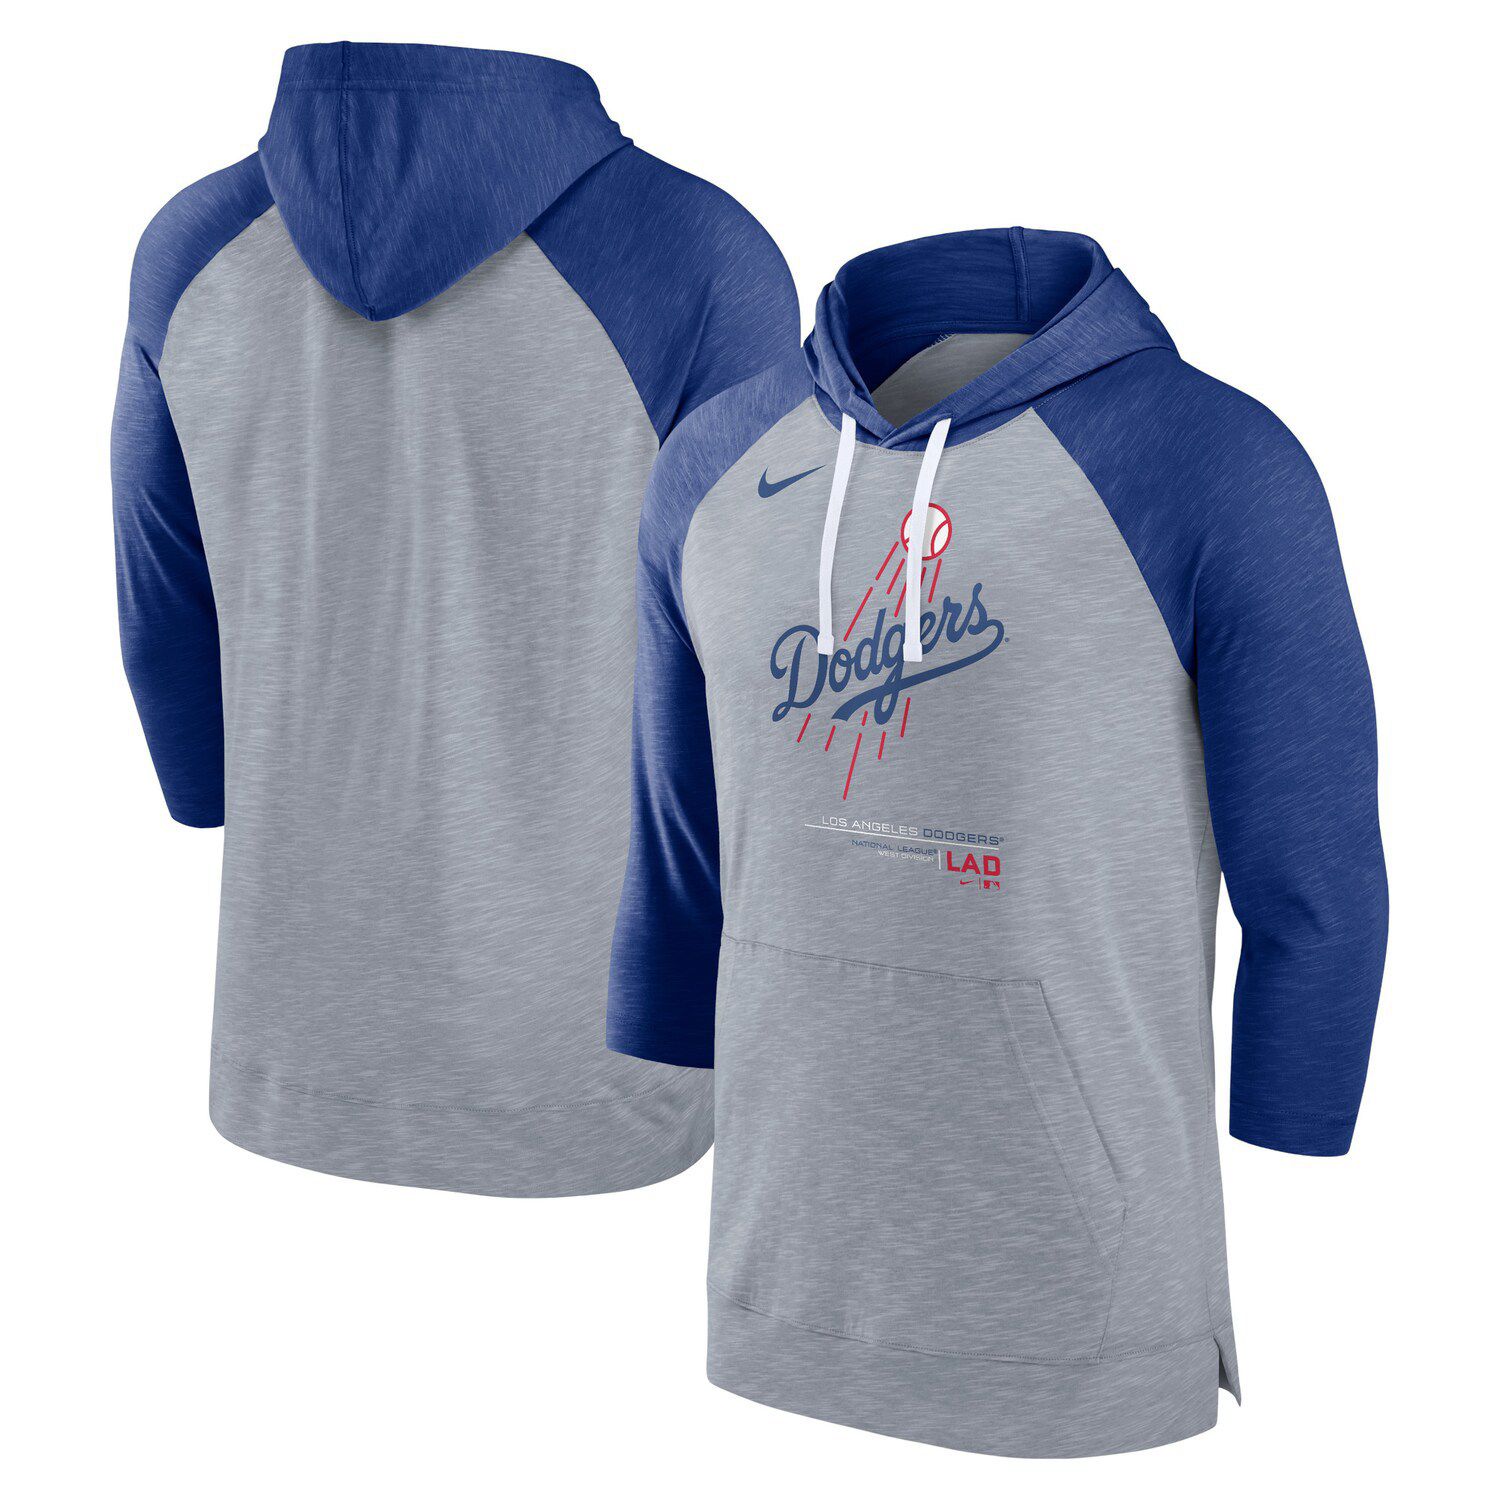 Men's Majestic Threads Oatmeal Los Angeles Dodgers Fleece Pullover  Sweatshirt